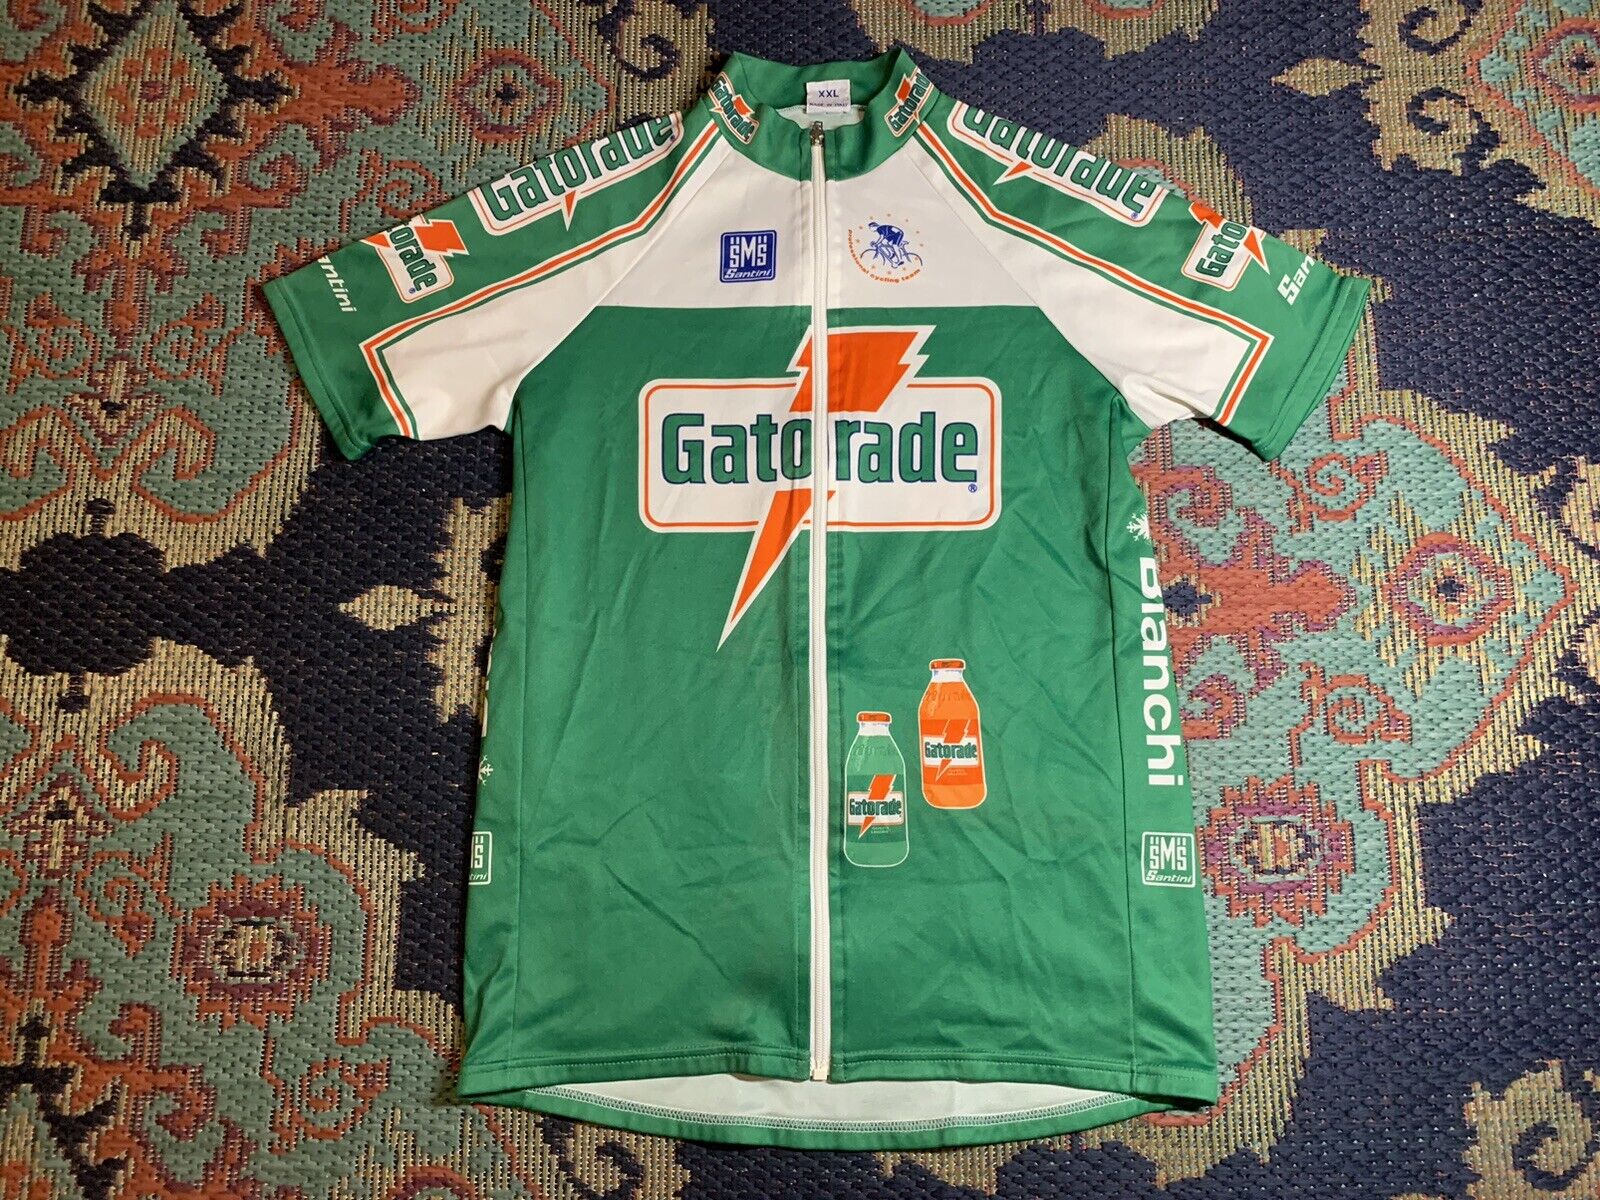 BIANCHI SMS Santini GATORADE Professional Cycling Team Jersey ITALY XXL Vintage